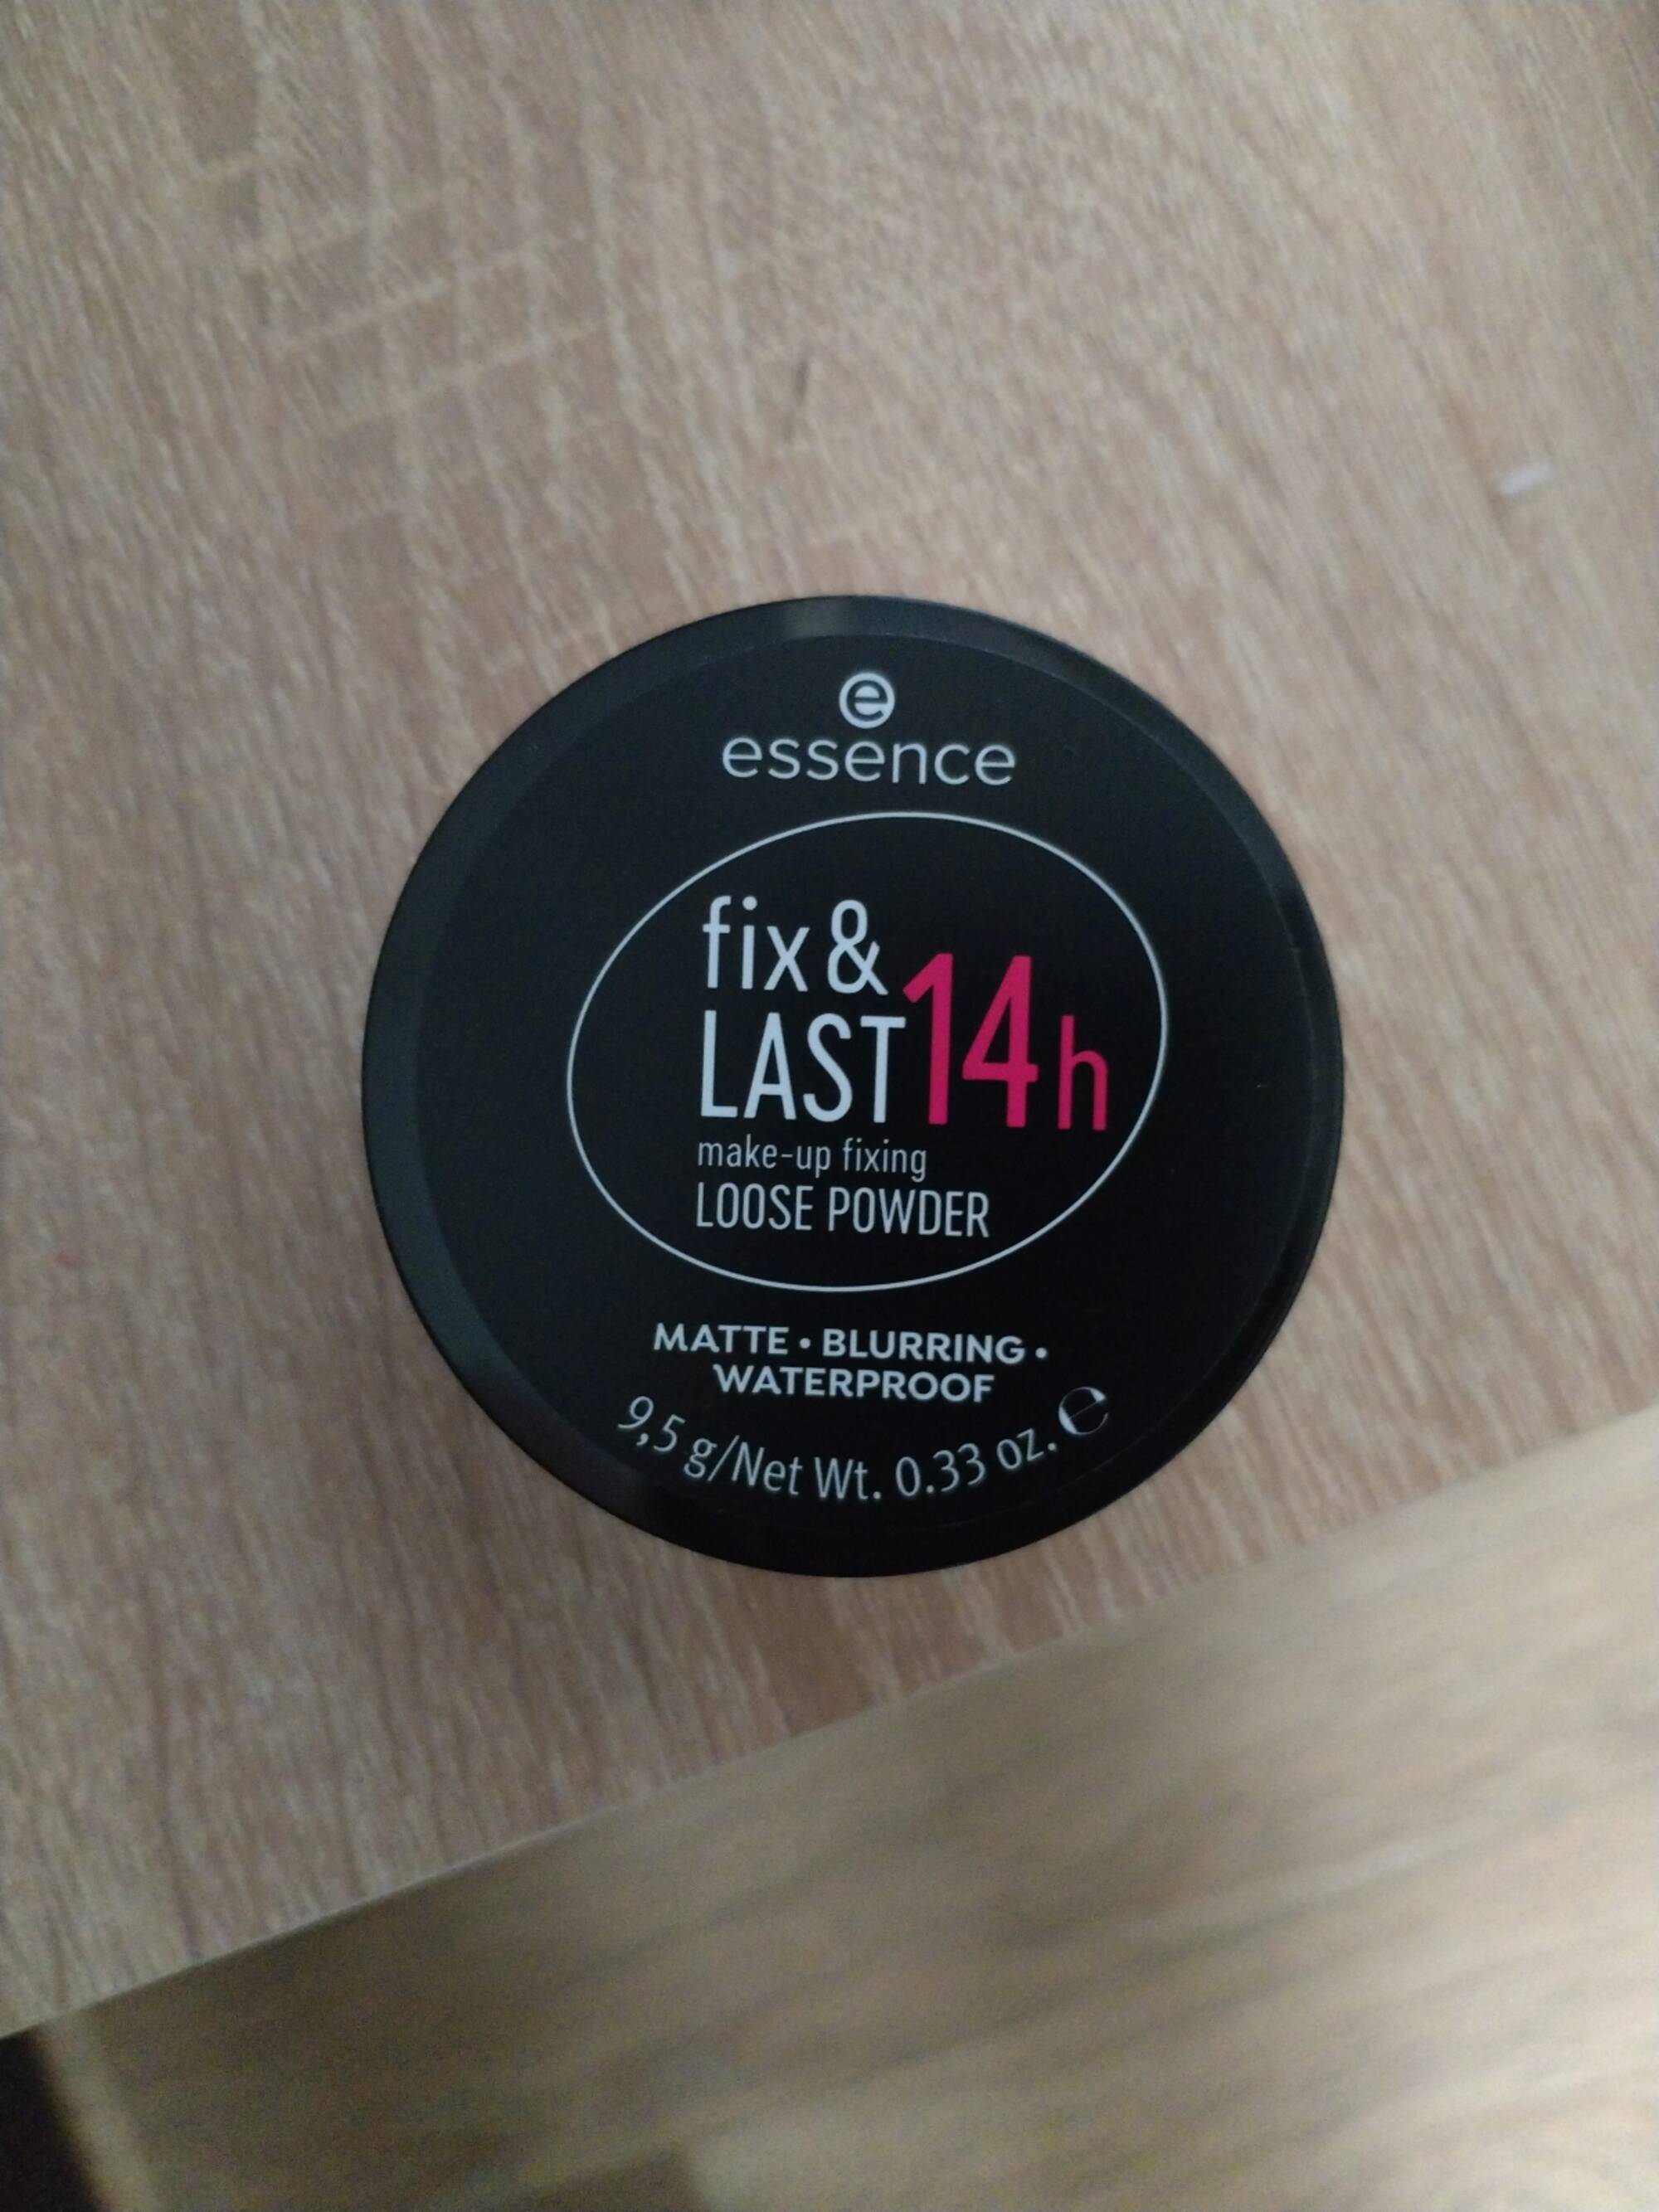 ESSENCE - Fix & last 14h - Make-up fixing loose powder